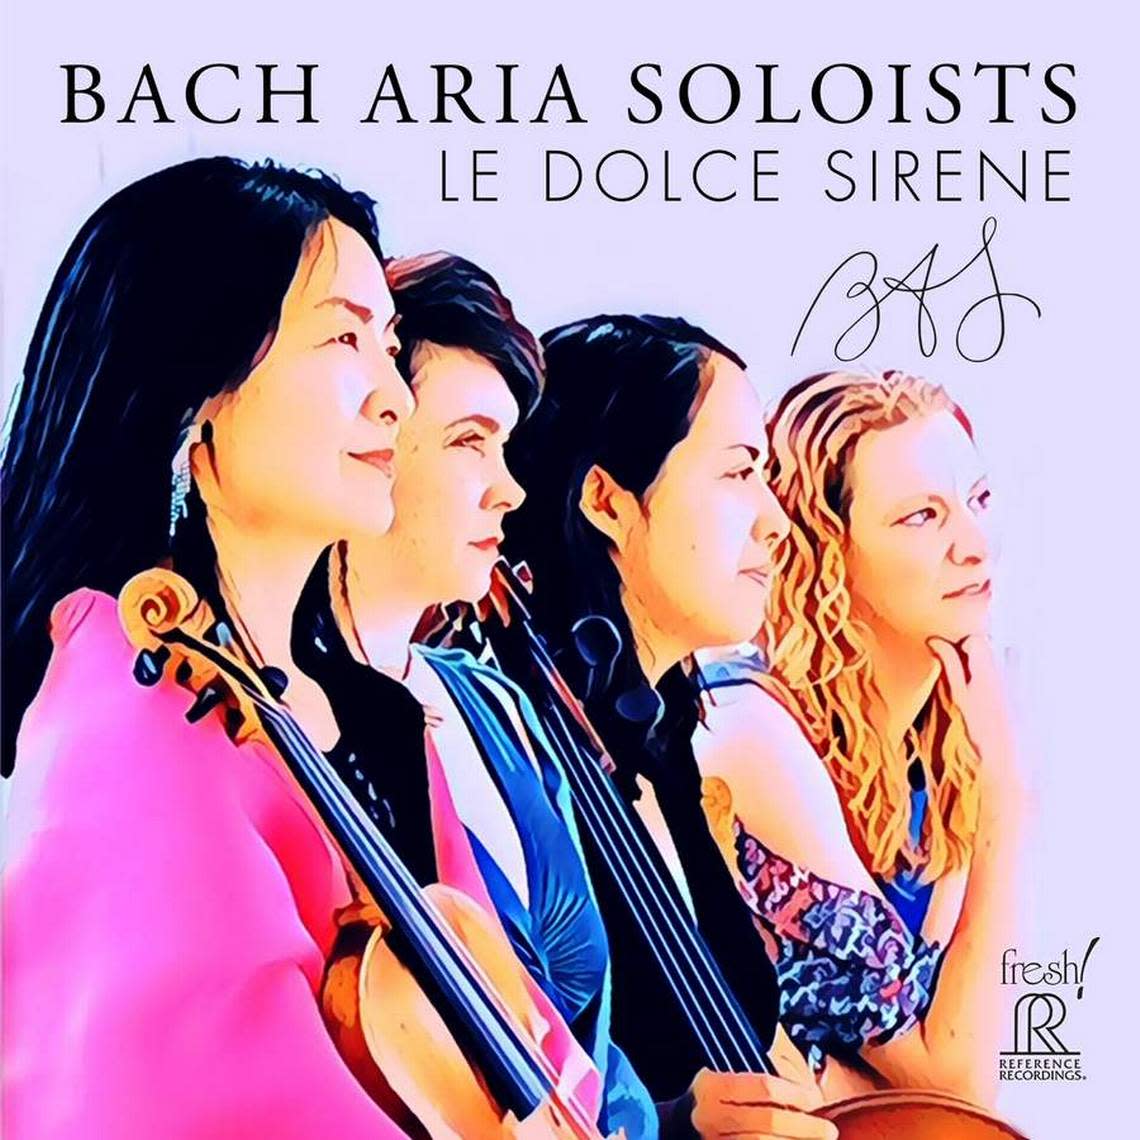 Bach Aria Solists will celebrate a new album, “Le Dolce Sirene.”